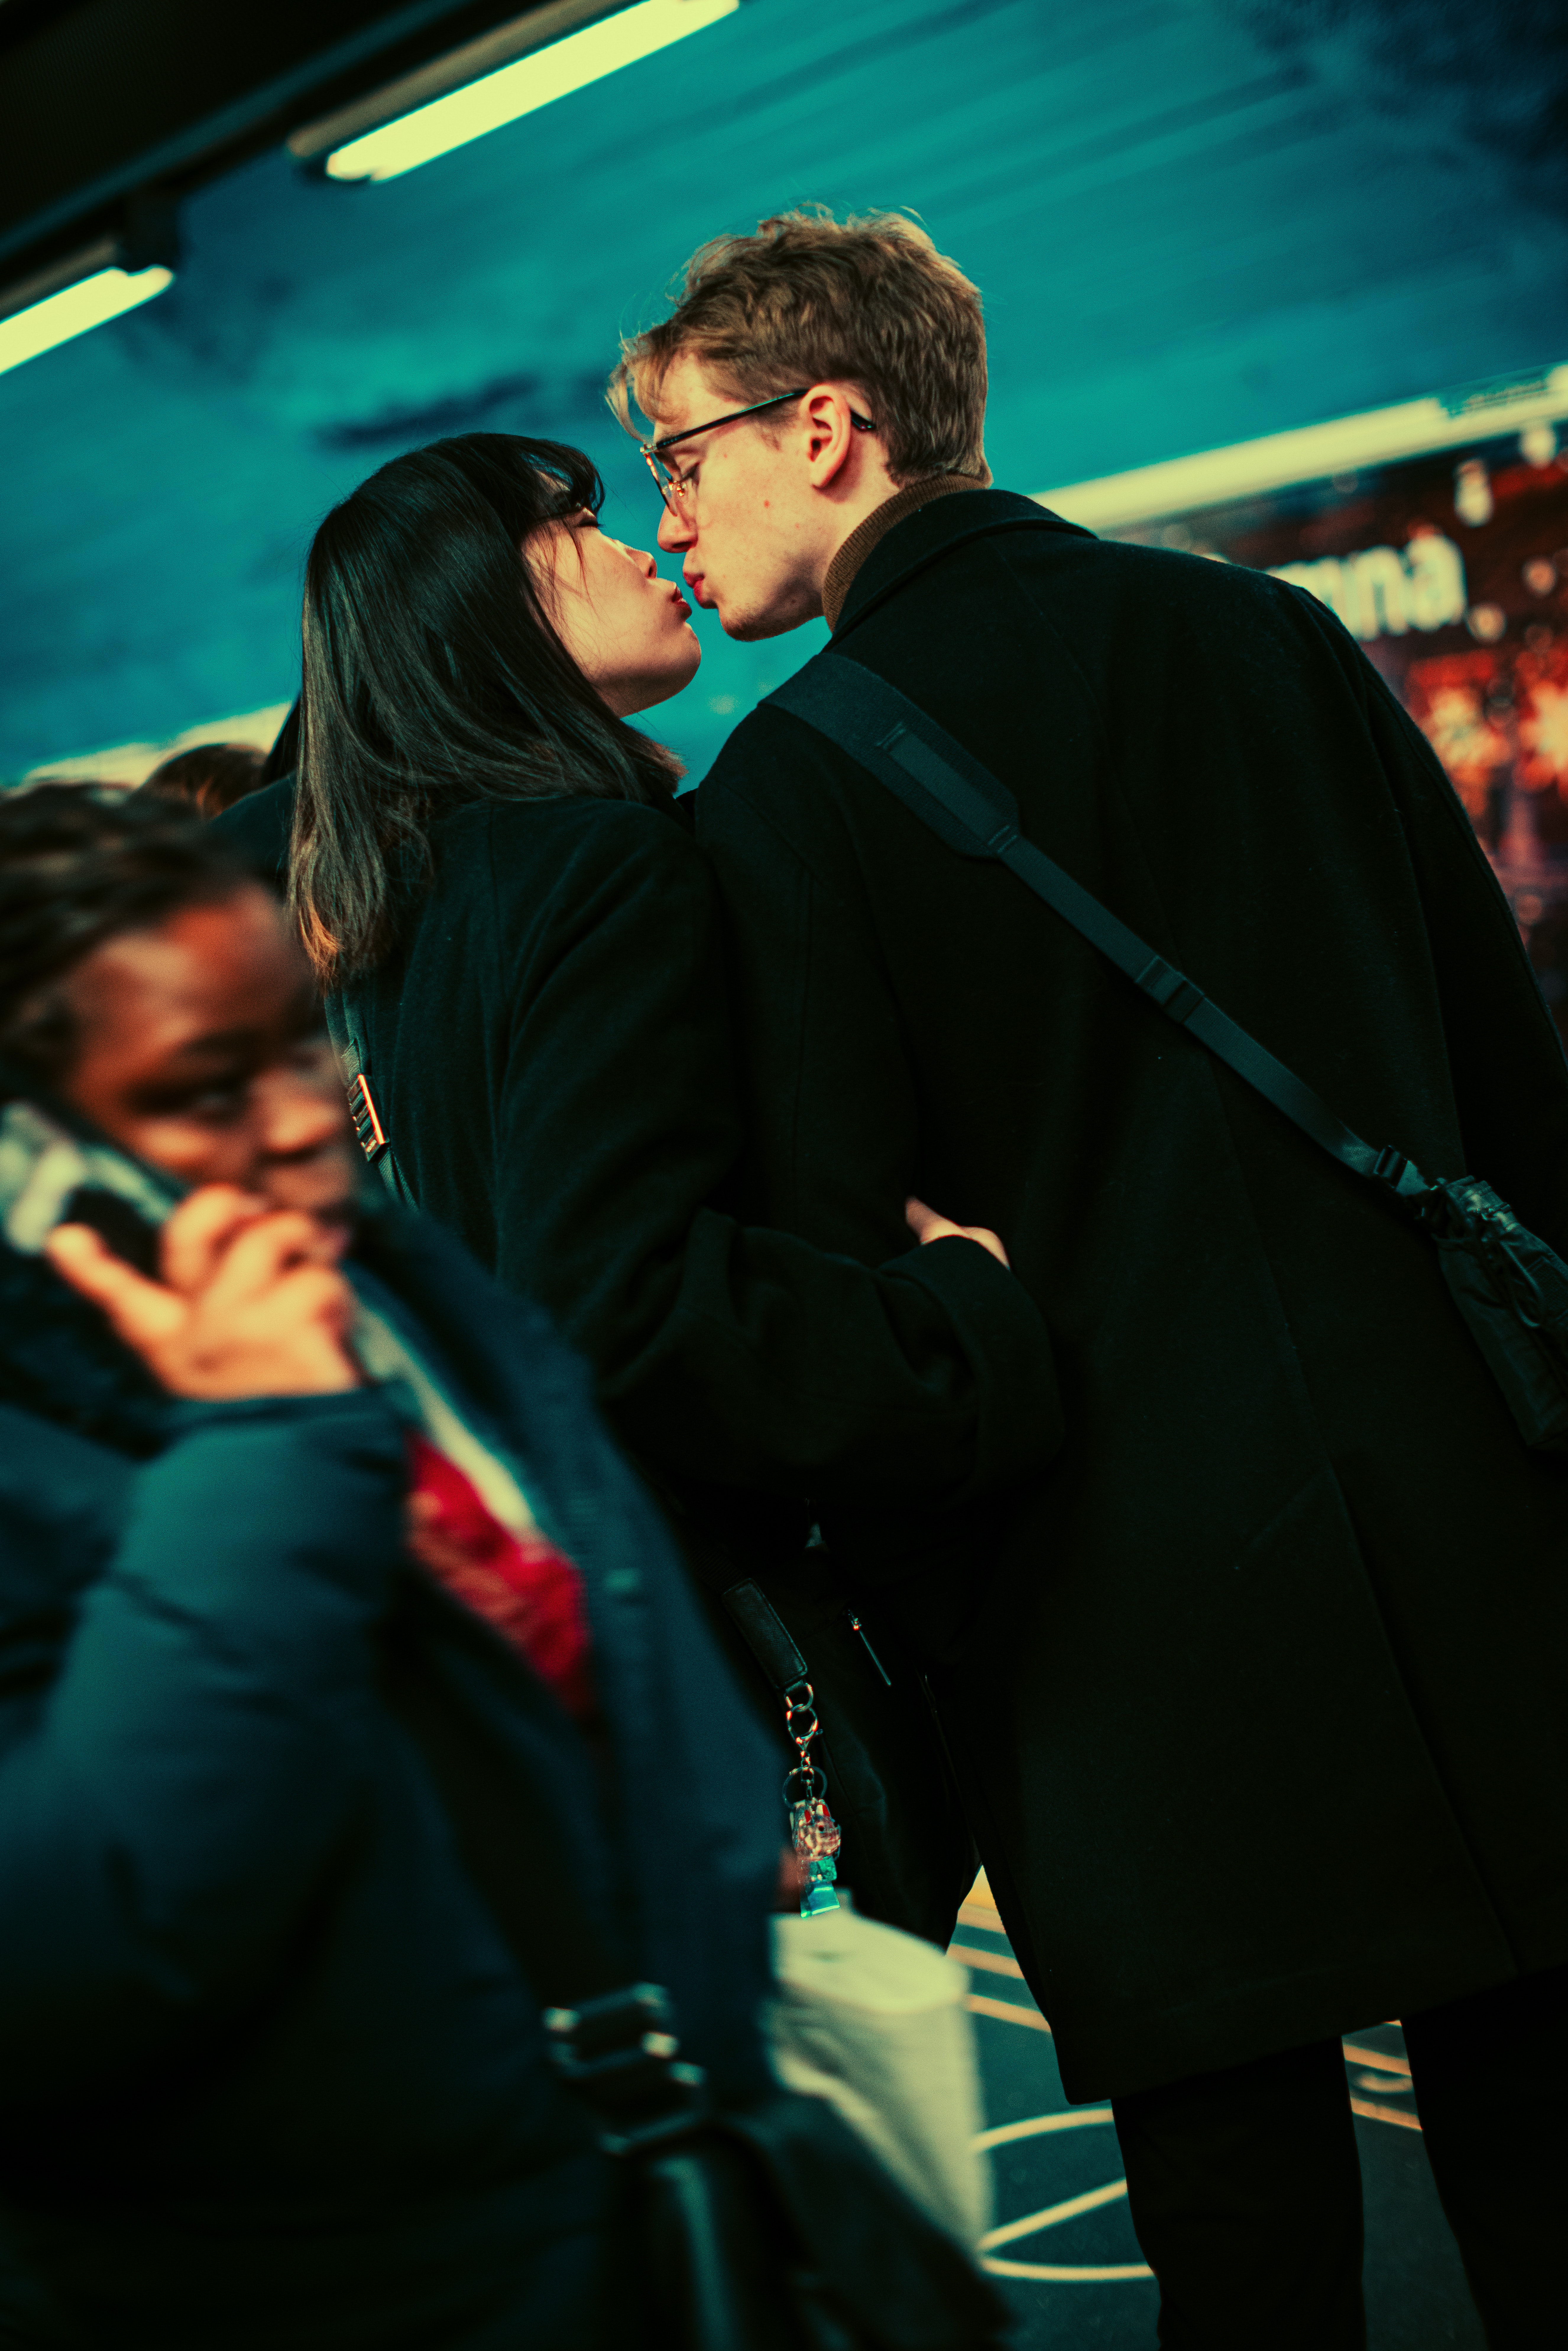 A couple kissing. | Source: Pexels